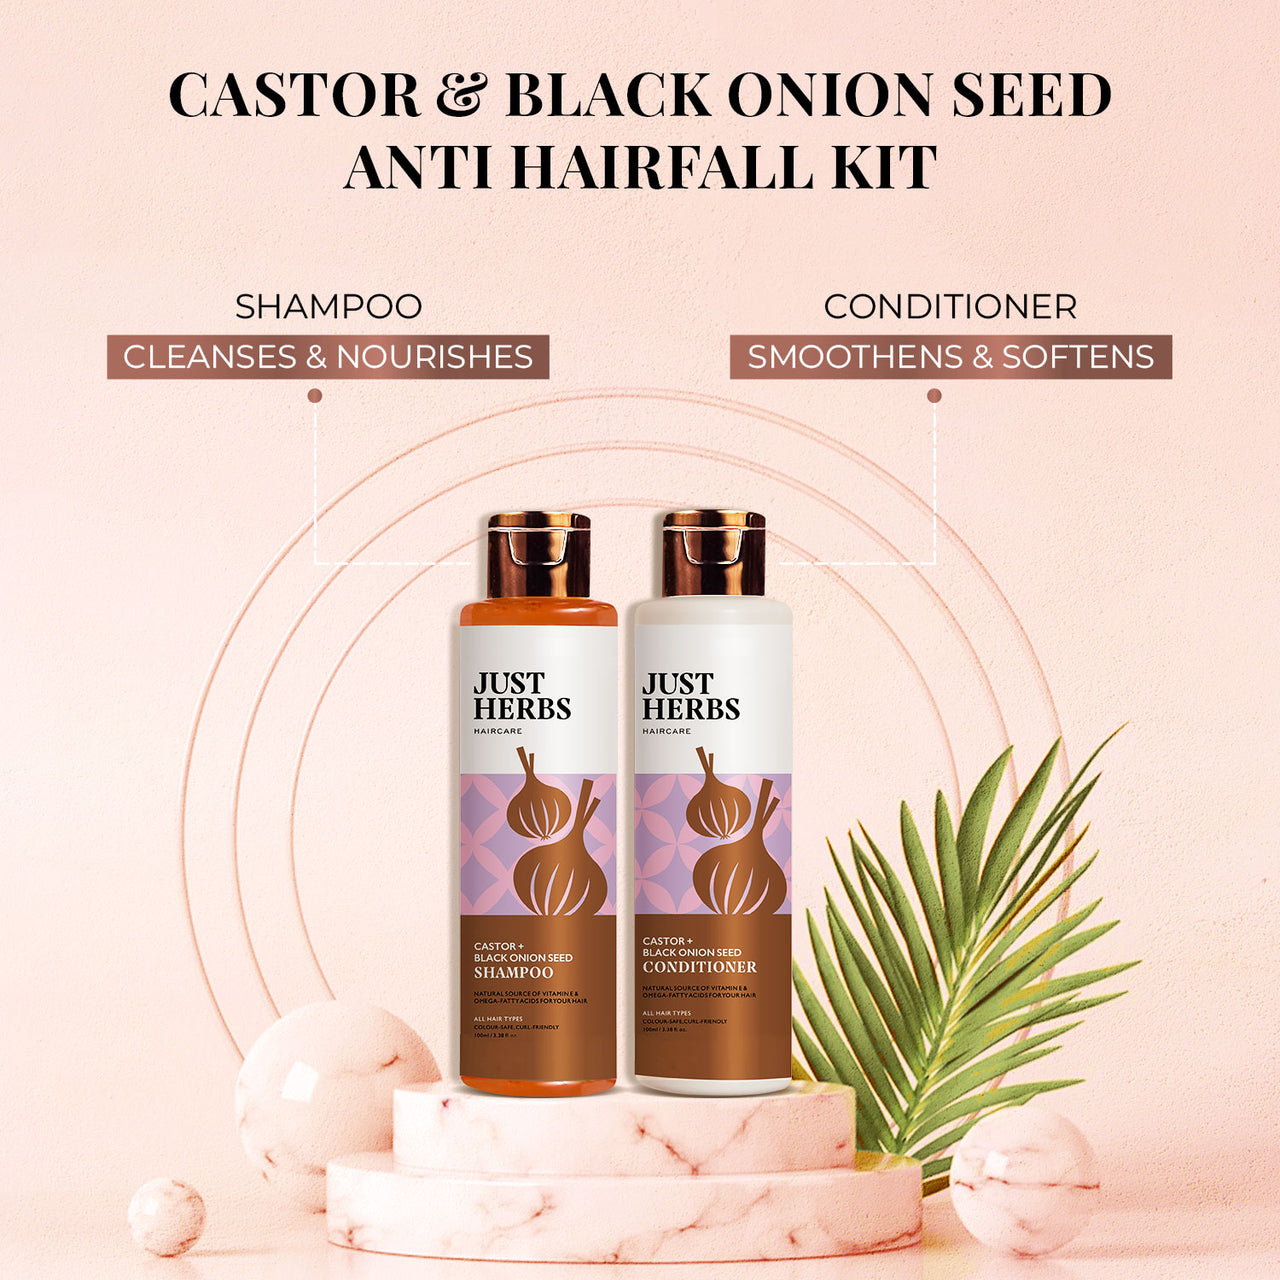 Anti Hair Fall Kit with Castor & Black Onion Seed